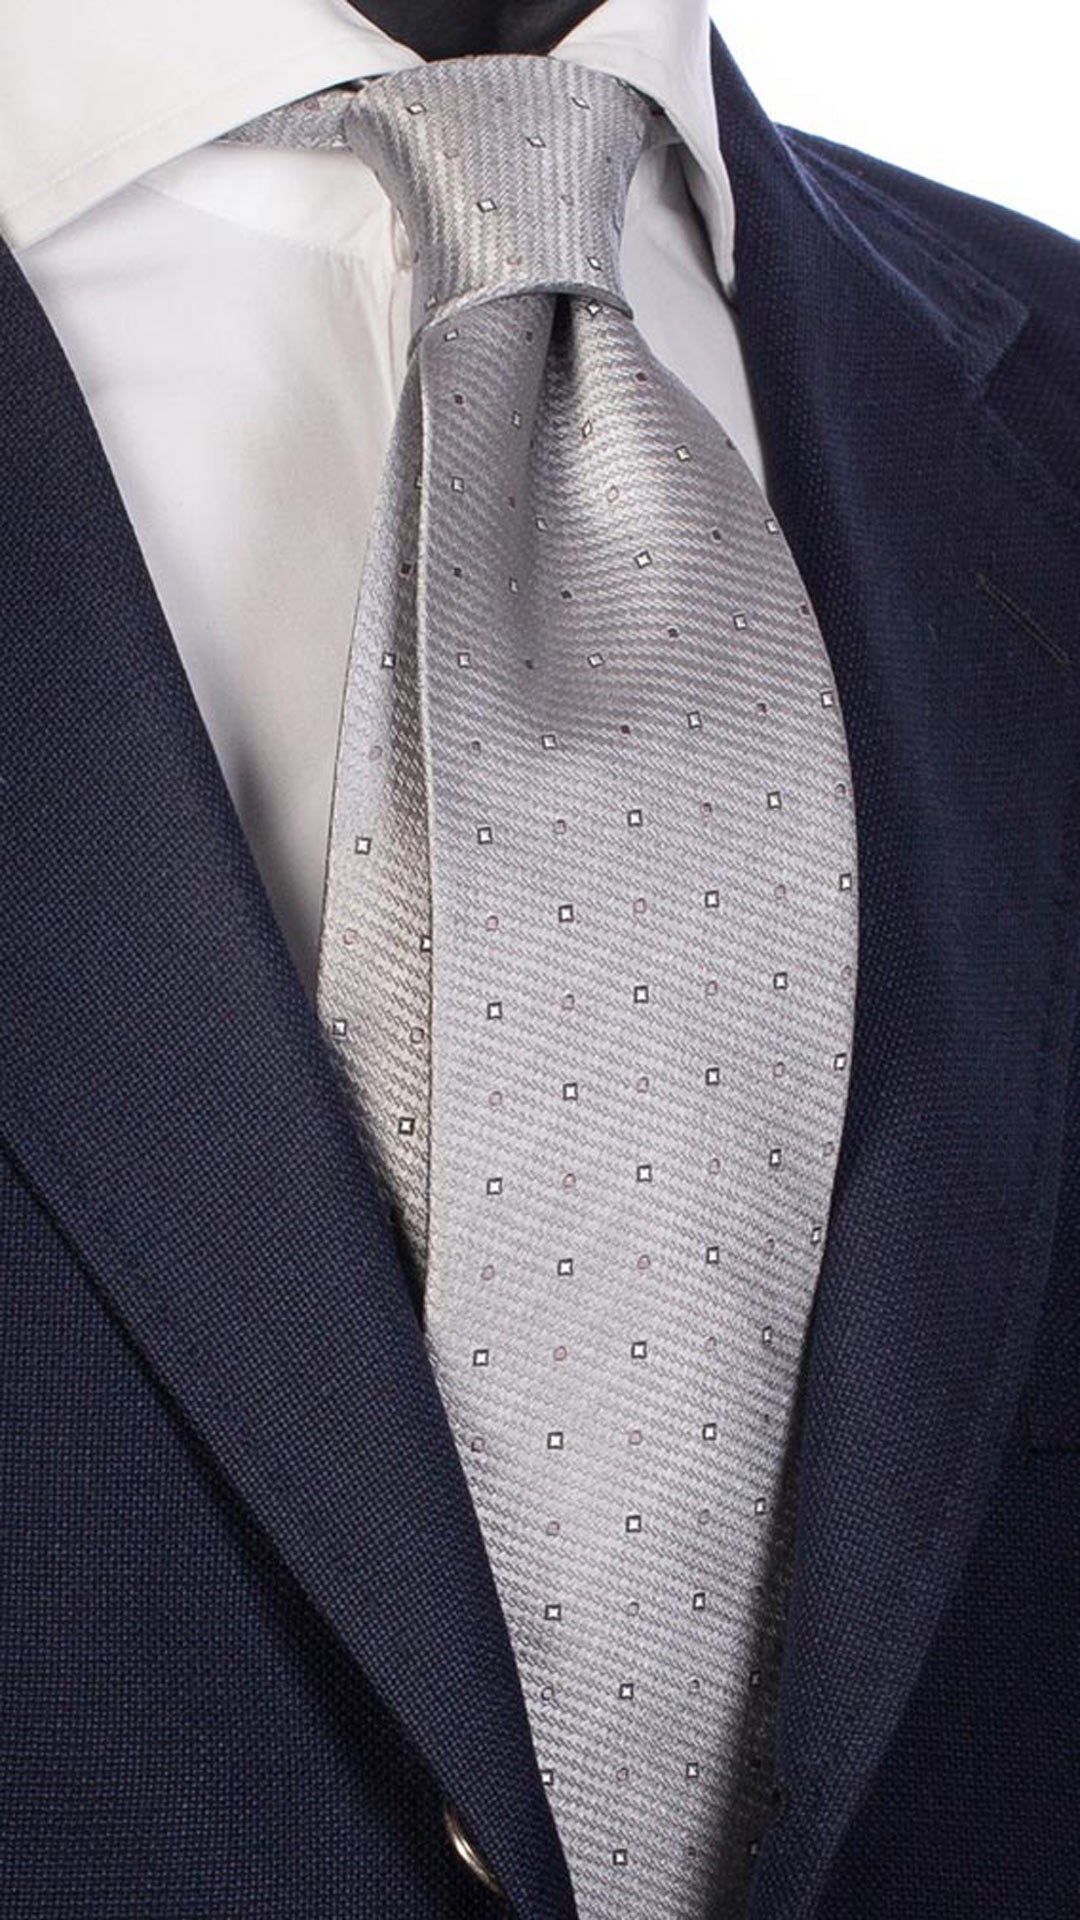 Cravatta da Cerimonia di Seta Grigia Fantasia Bianca Grigia CY2569 Made in Italy Graffeo Cravatte